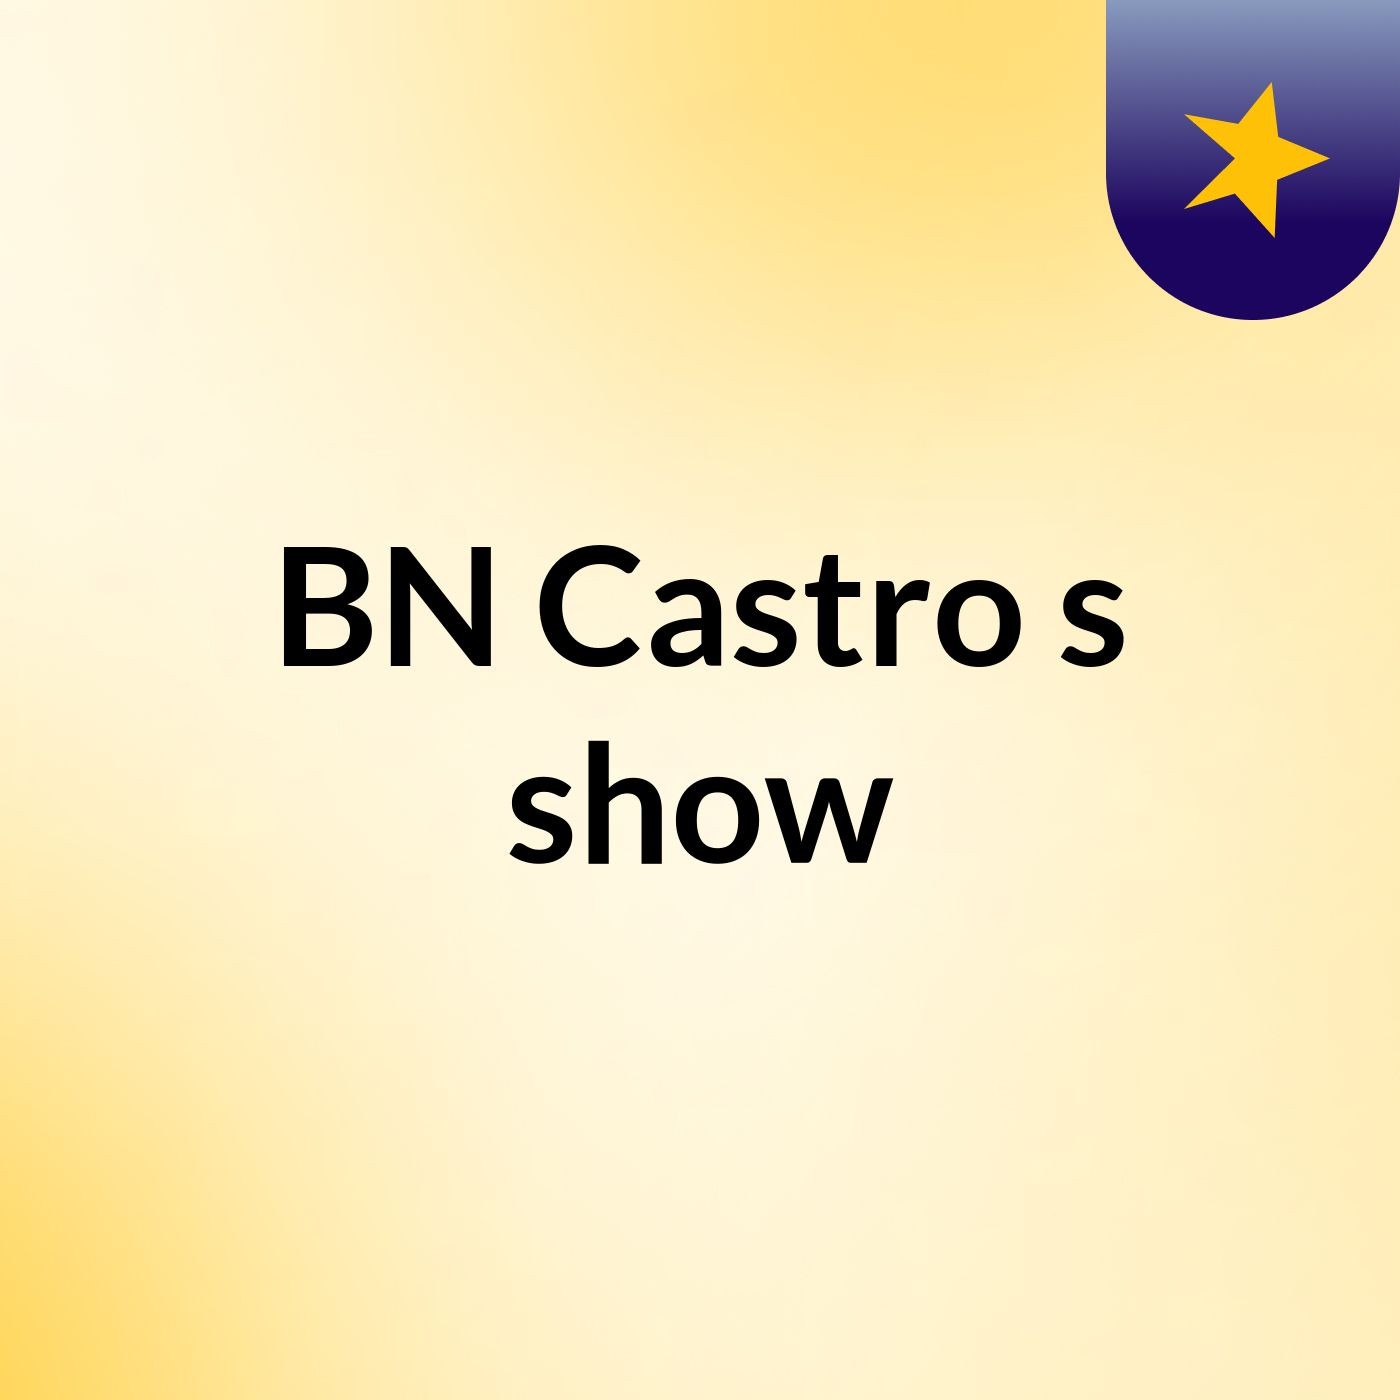 BN Castro's show